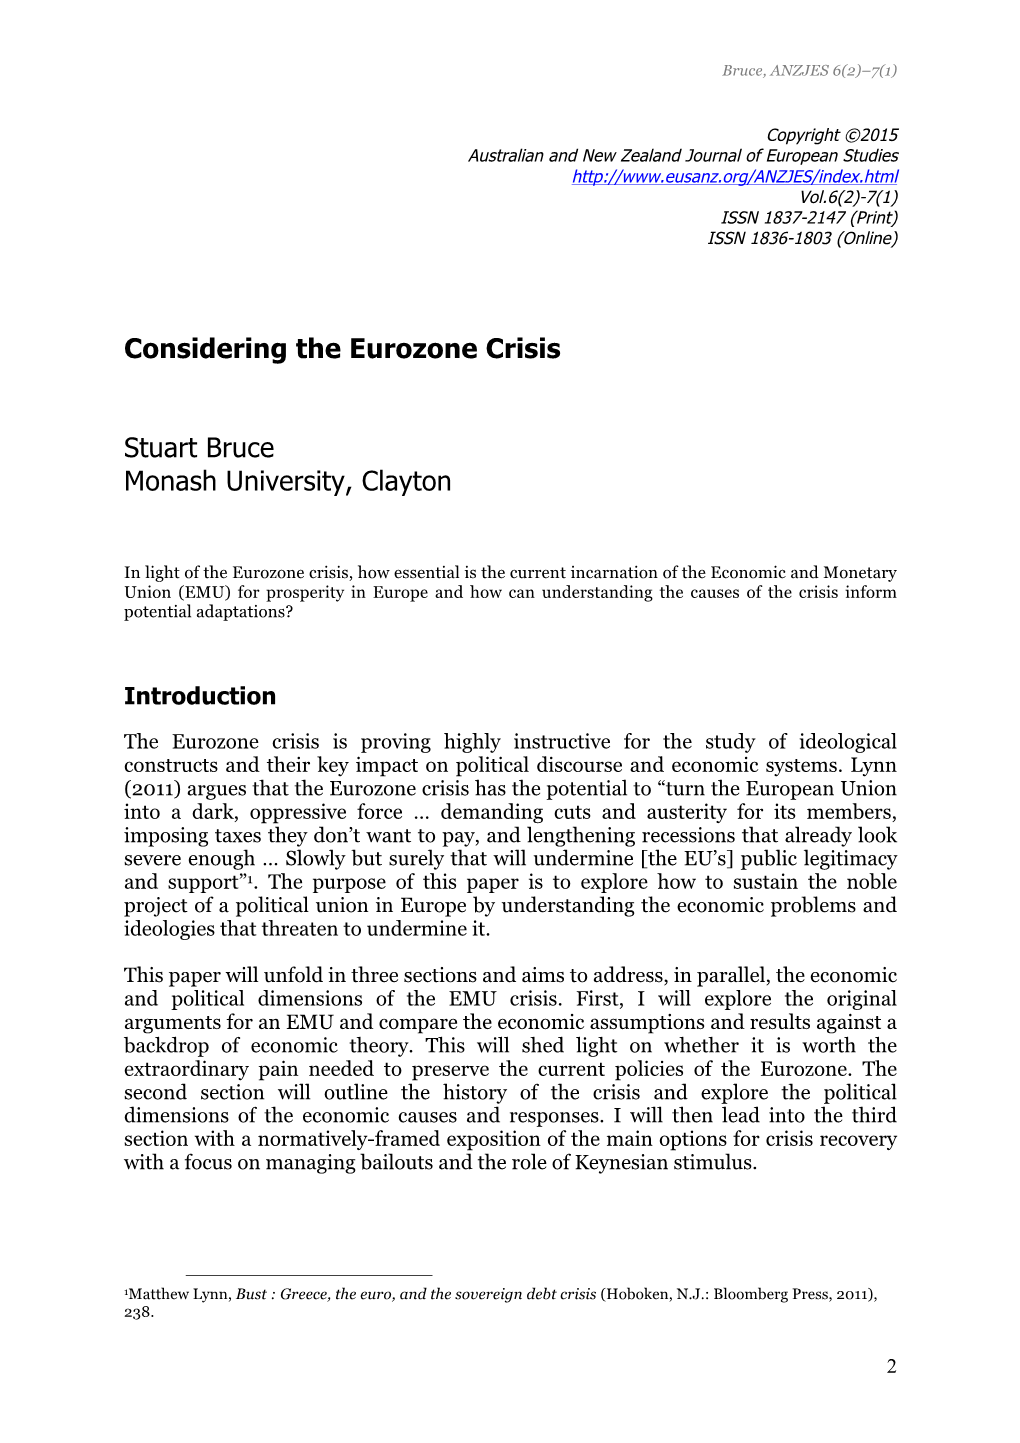 Considering the Eurozone Crisis